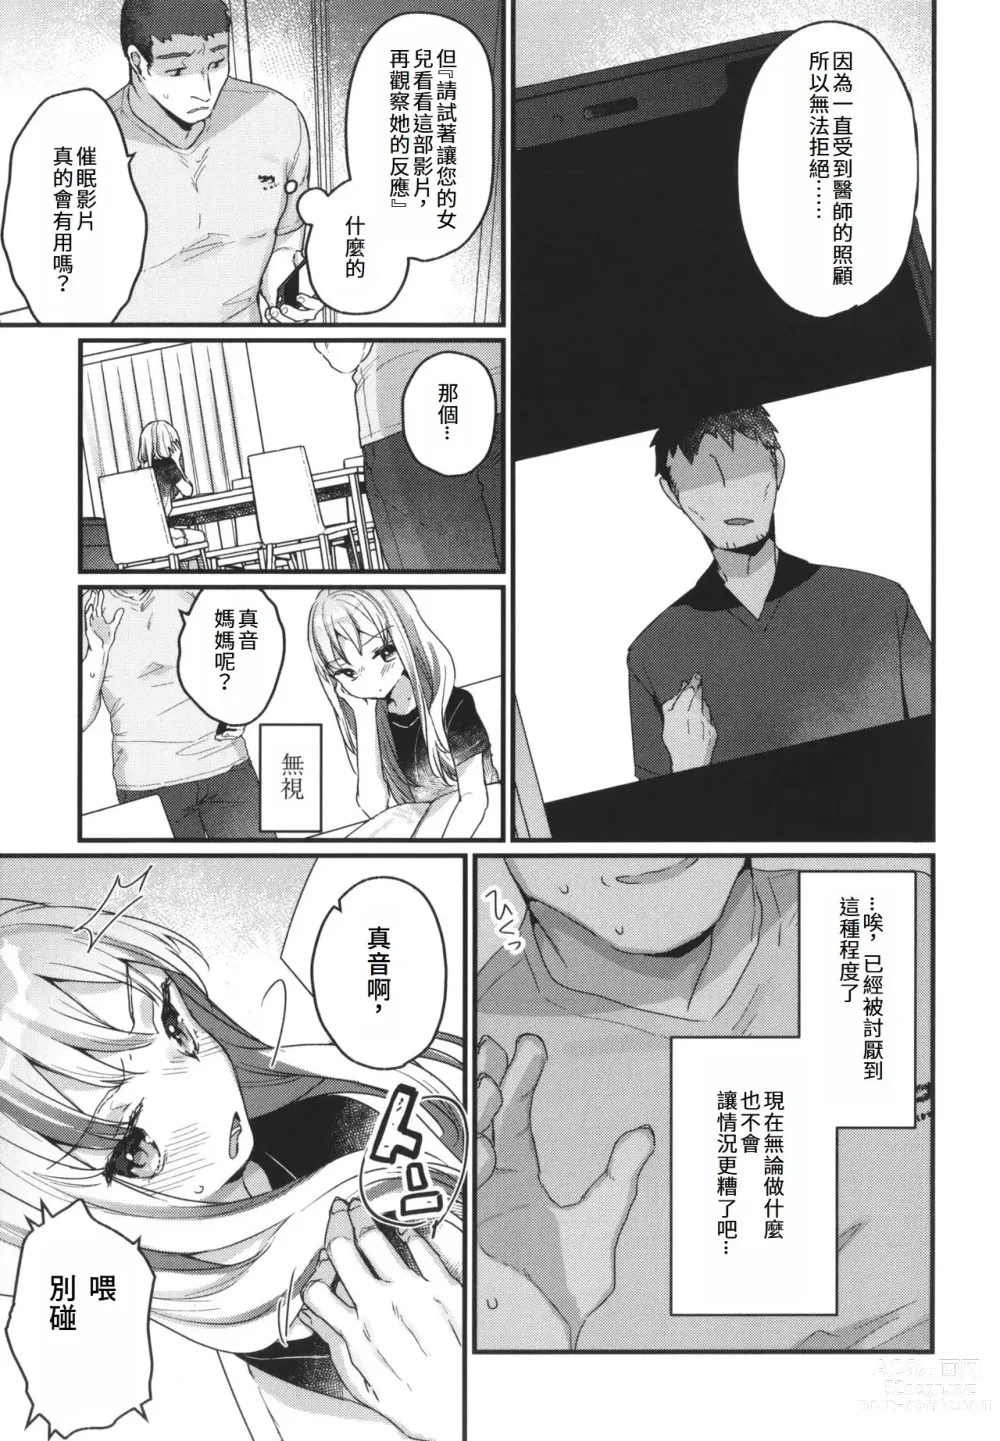 Page 3 of manga 催眠治療太有效了